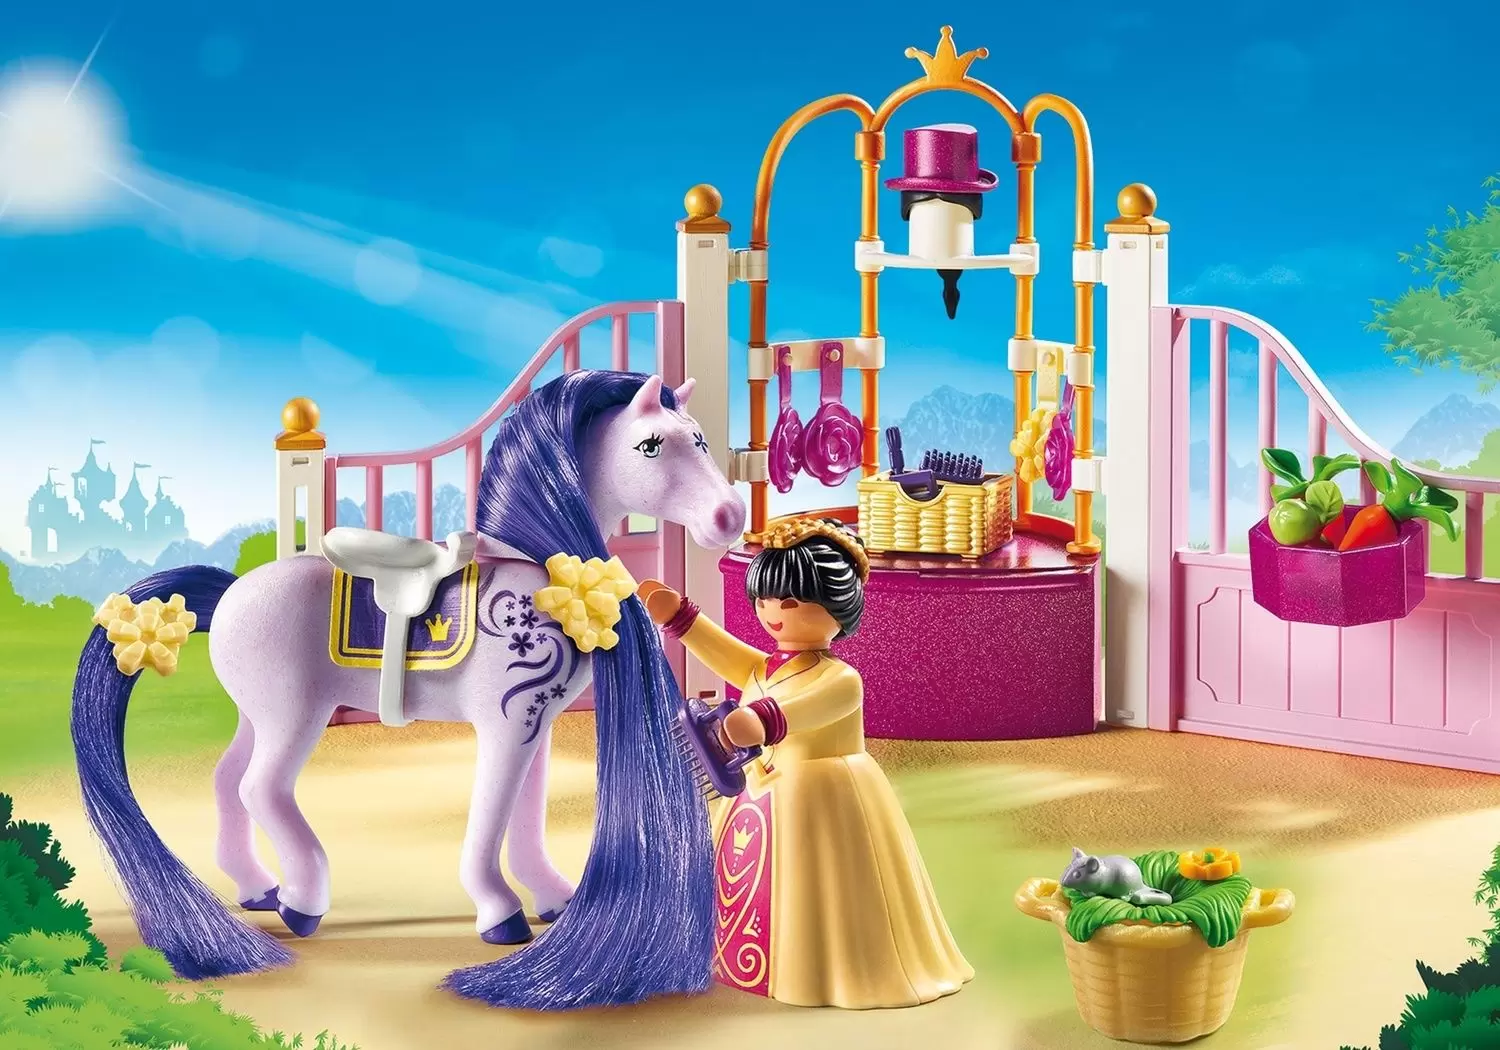 Playmobil Princess - Royal stables